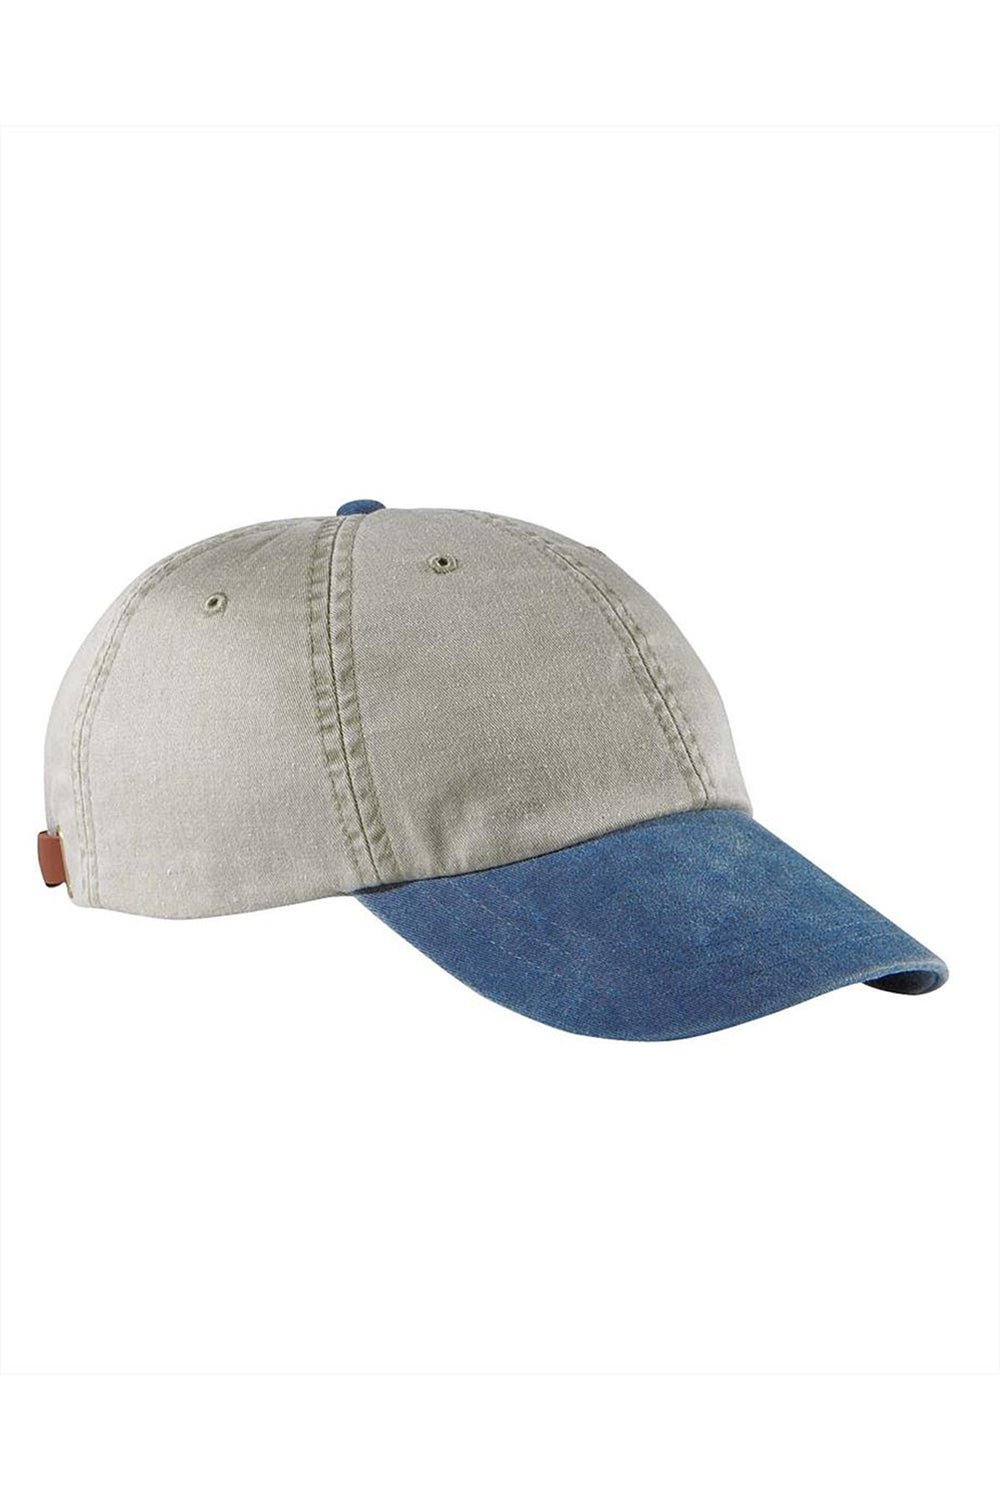 Adams AD969 Mens Adjustable Hat Stone/Royal Blue Flat Front